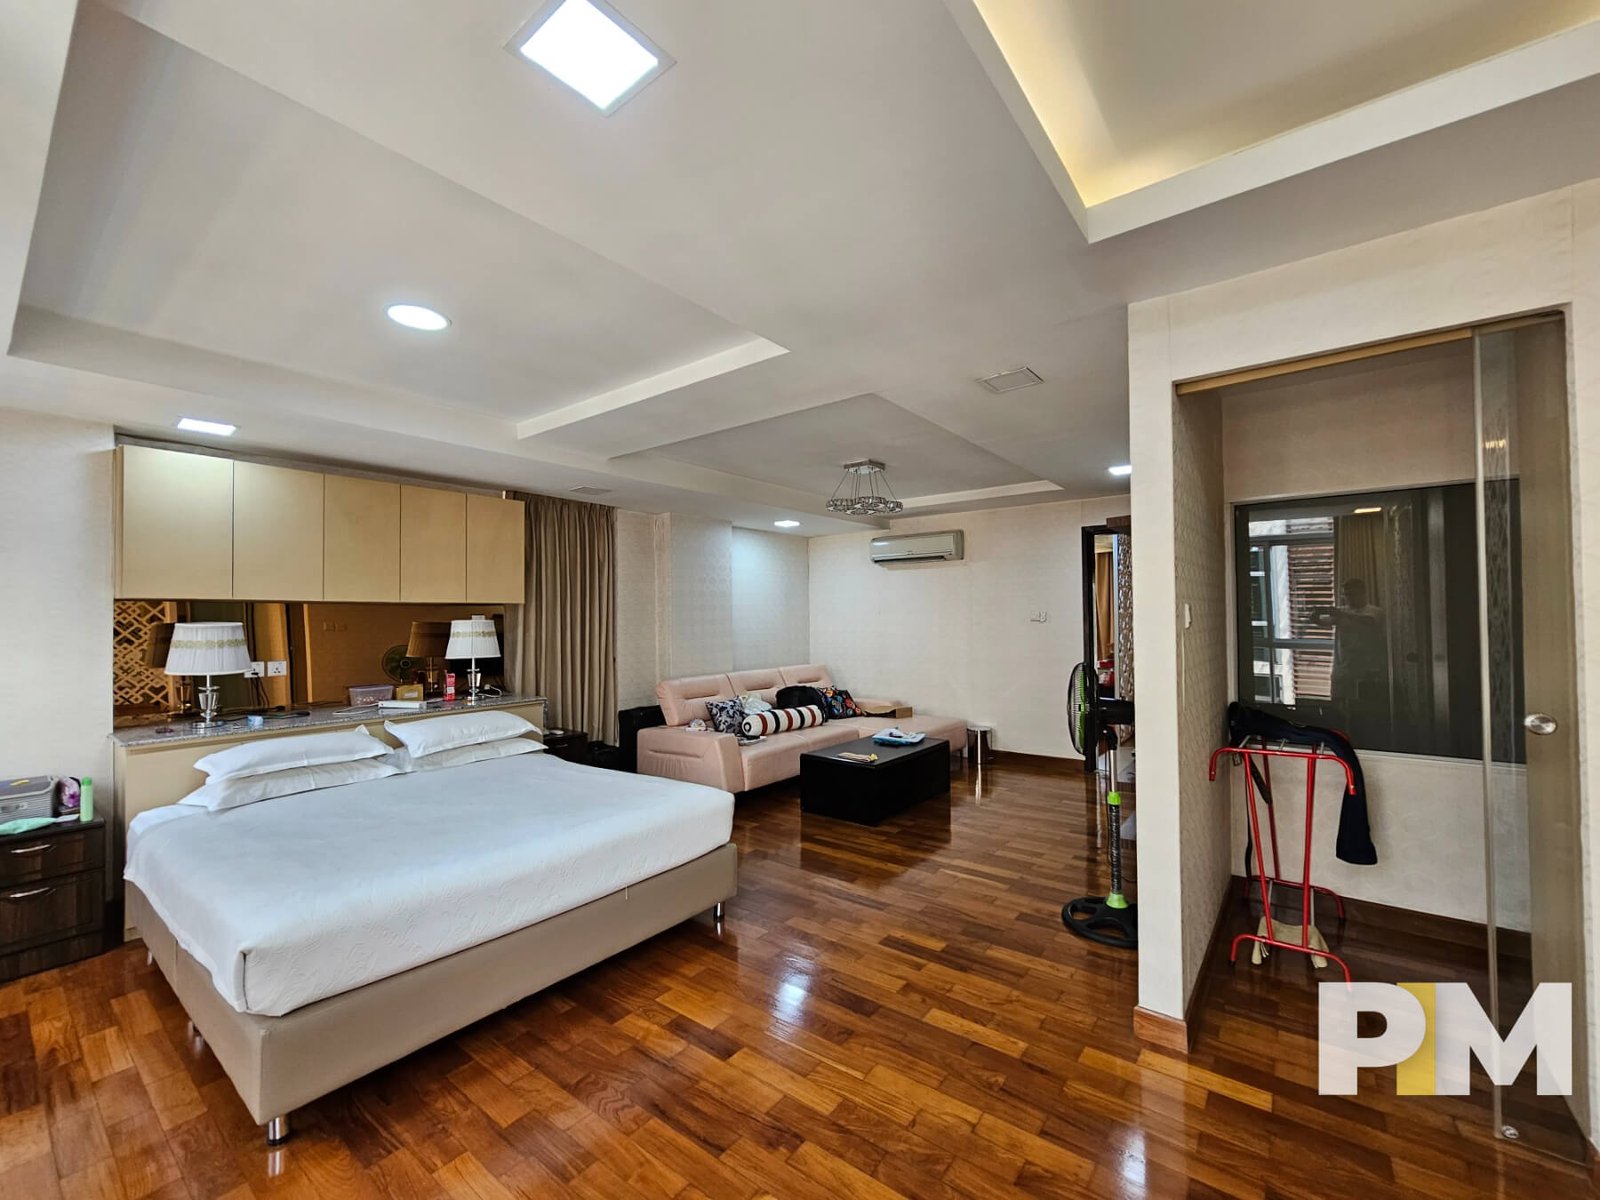 Bedroom area - Yangon Real Estate